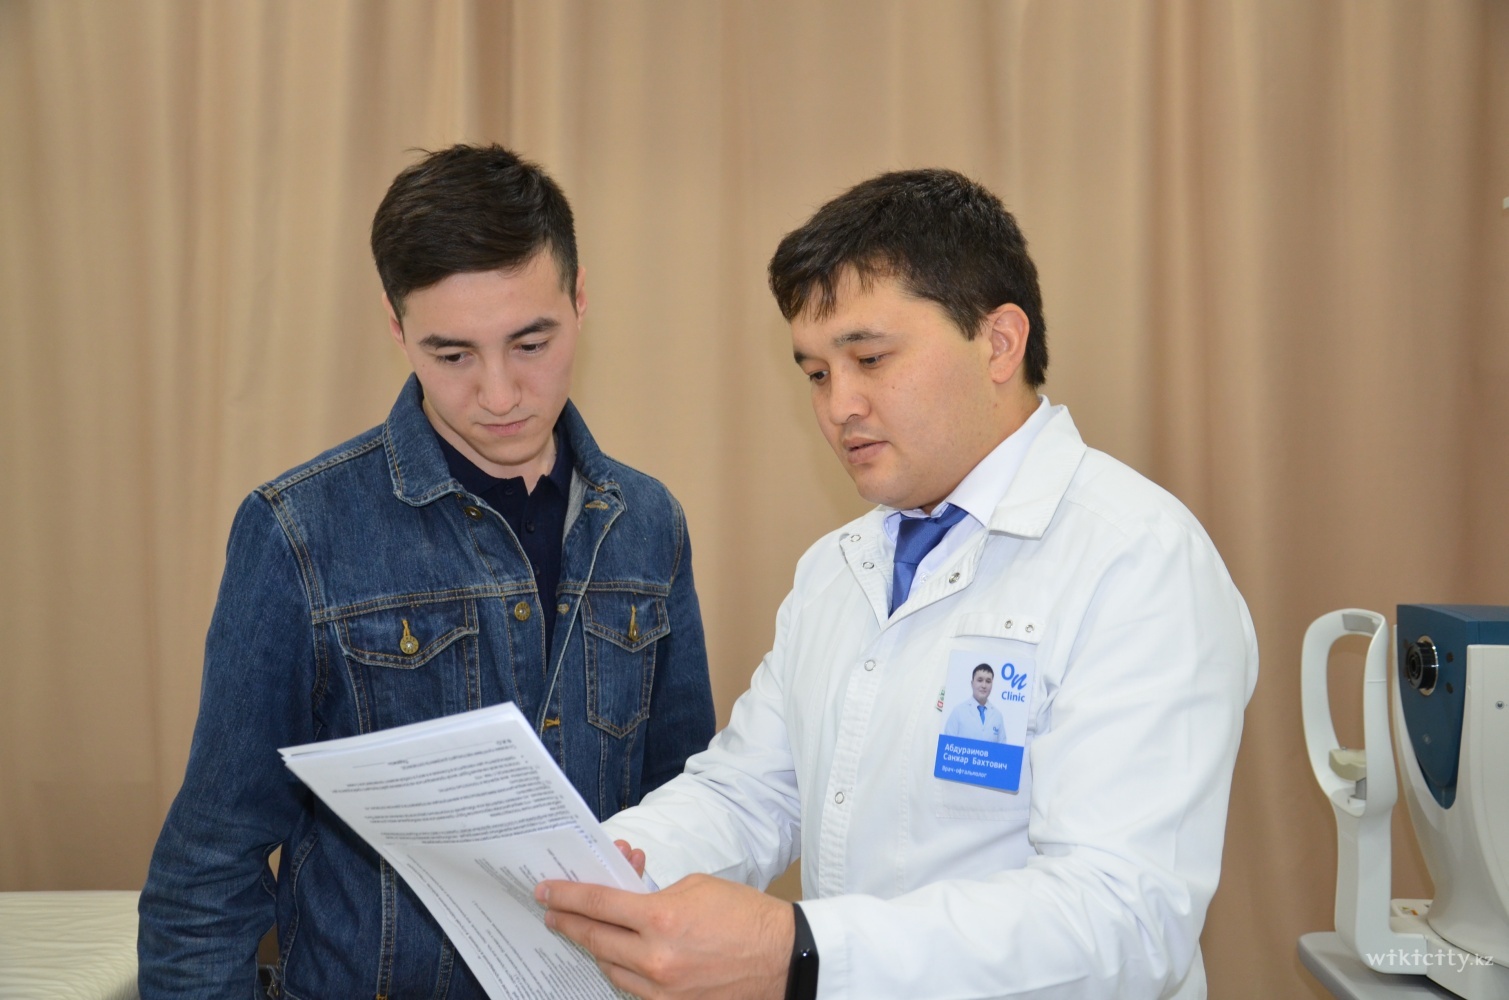 Фото On Clinic - Алматы. Врач-офтальмолог Абдураимов Санжар Бахтович во время консультации с пациентом